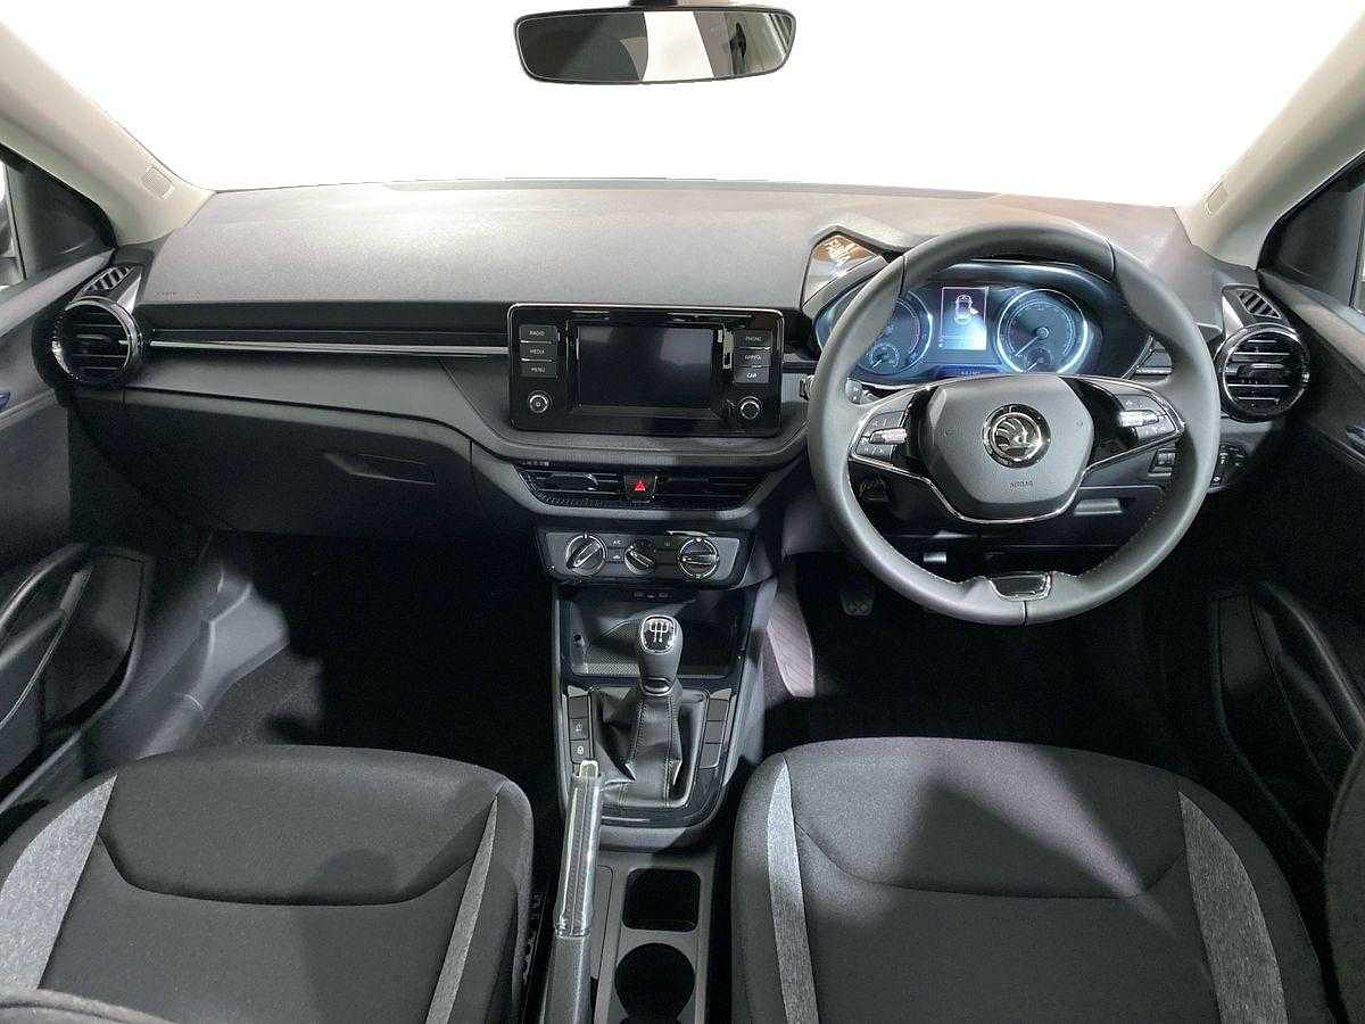 SKODA Fabia 1.0 TSI (109ps) SE Comfort 5-Dr Hatchback